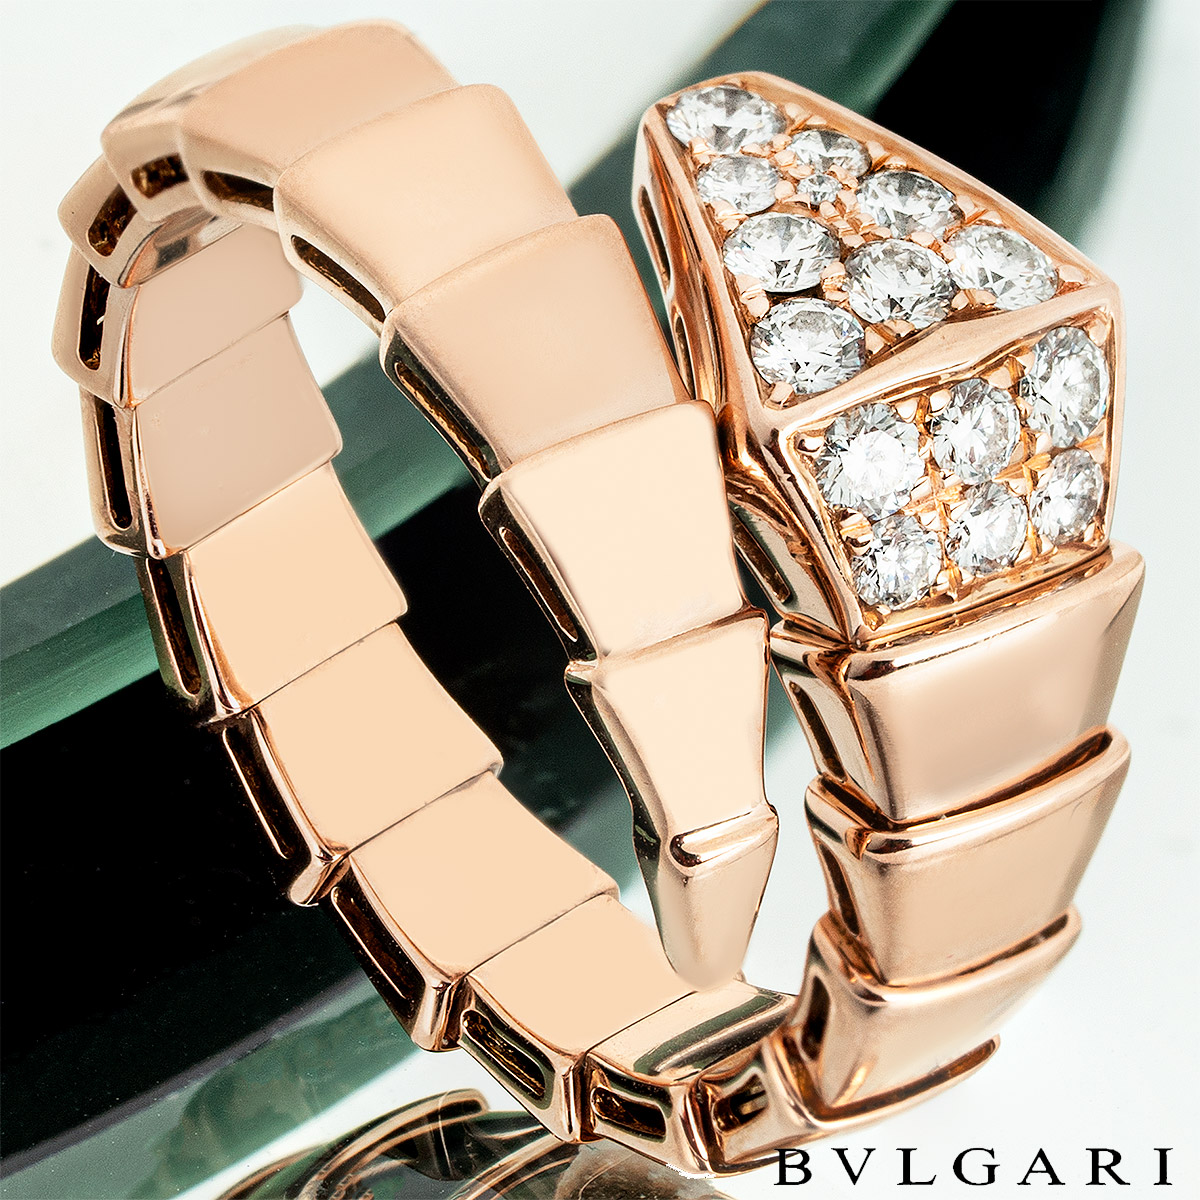 Bvlgari Rose Gold Diamond Serpenti Viper Ring 345219